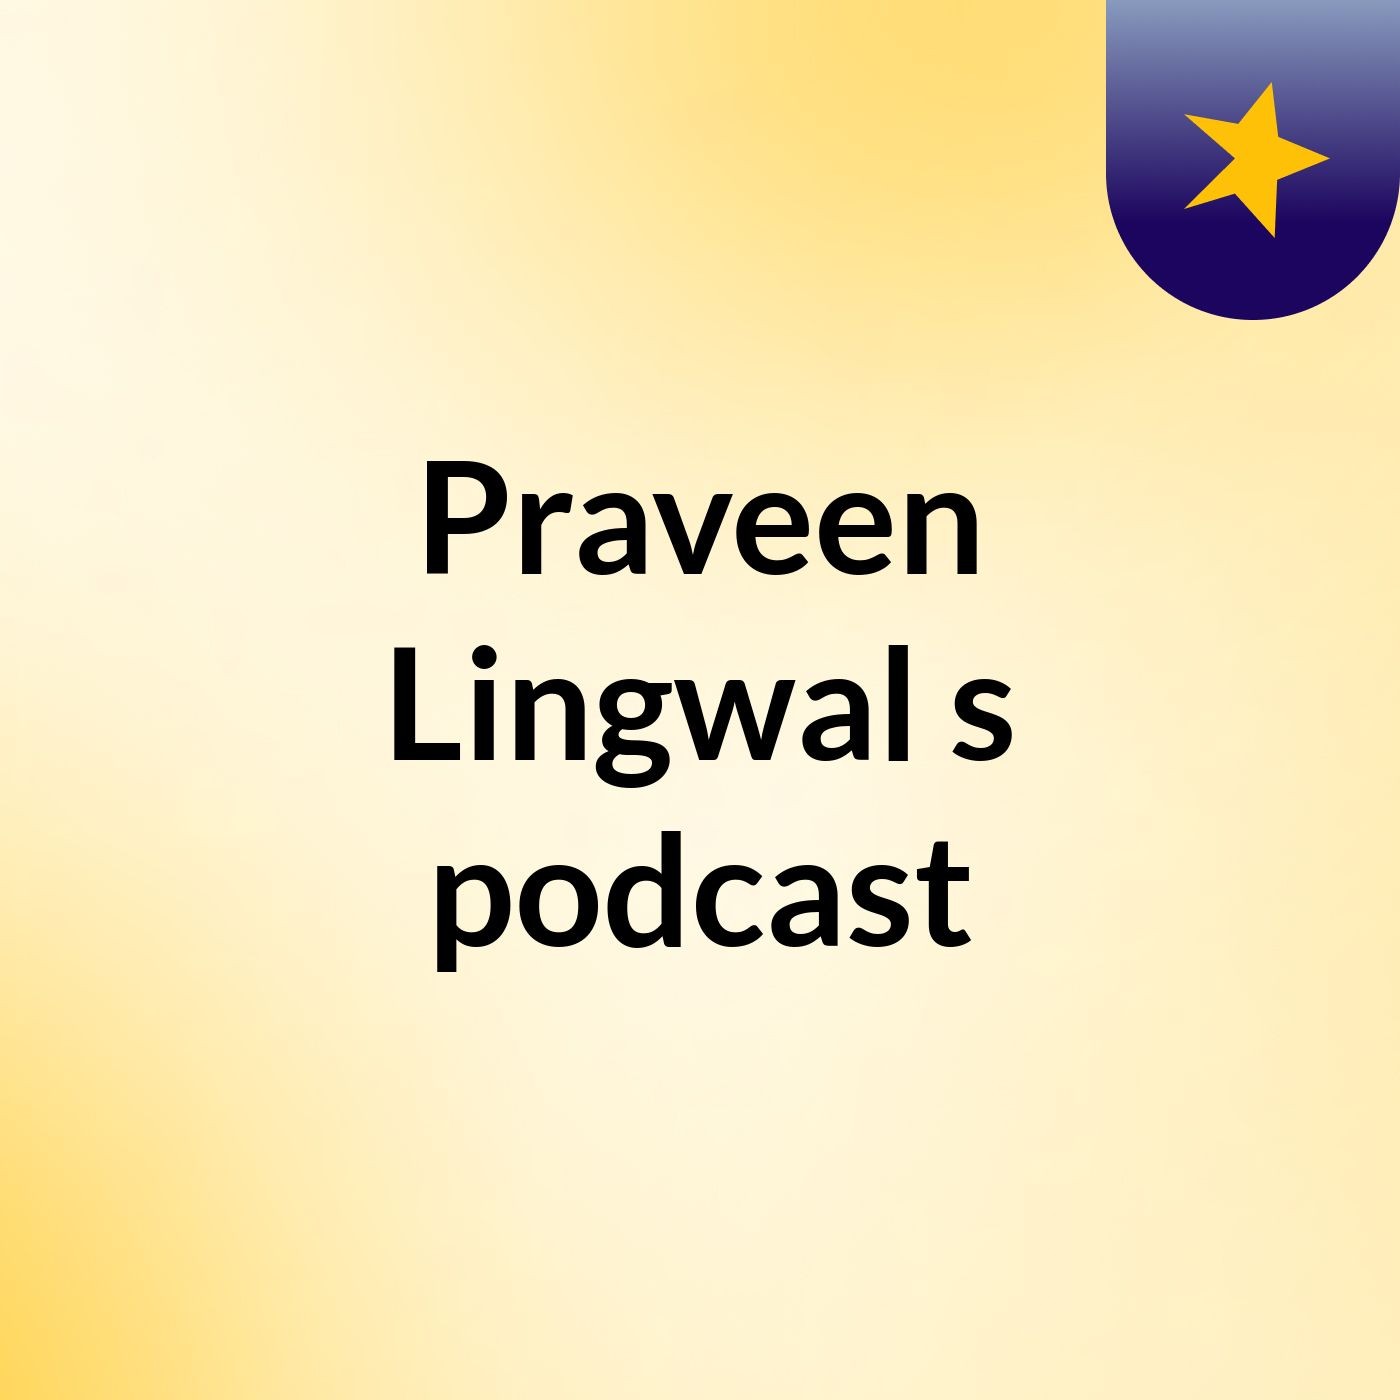 Episode 4 - Praveen Lingwal's podcast